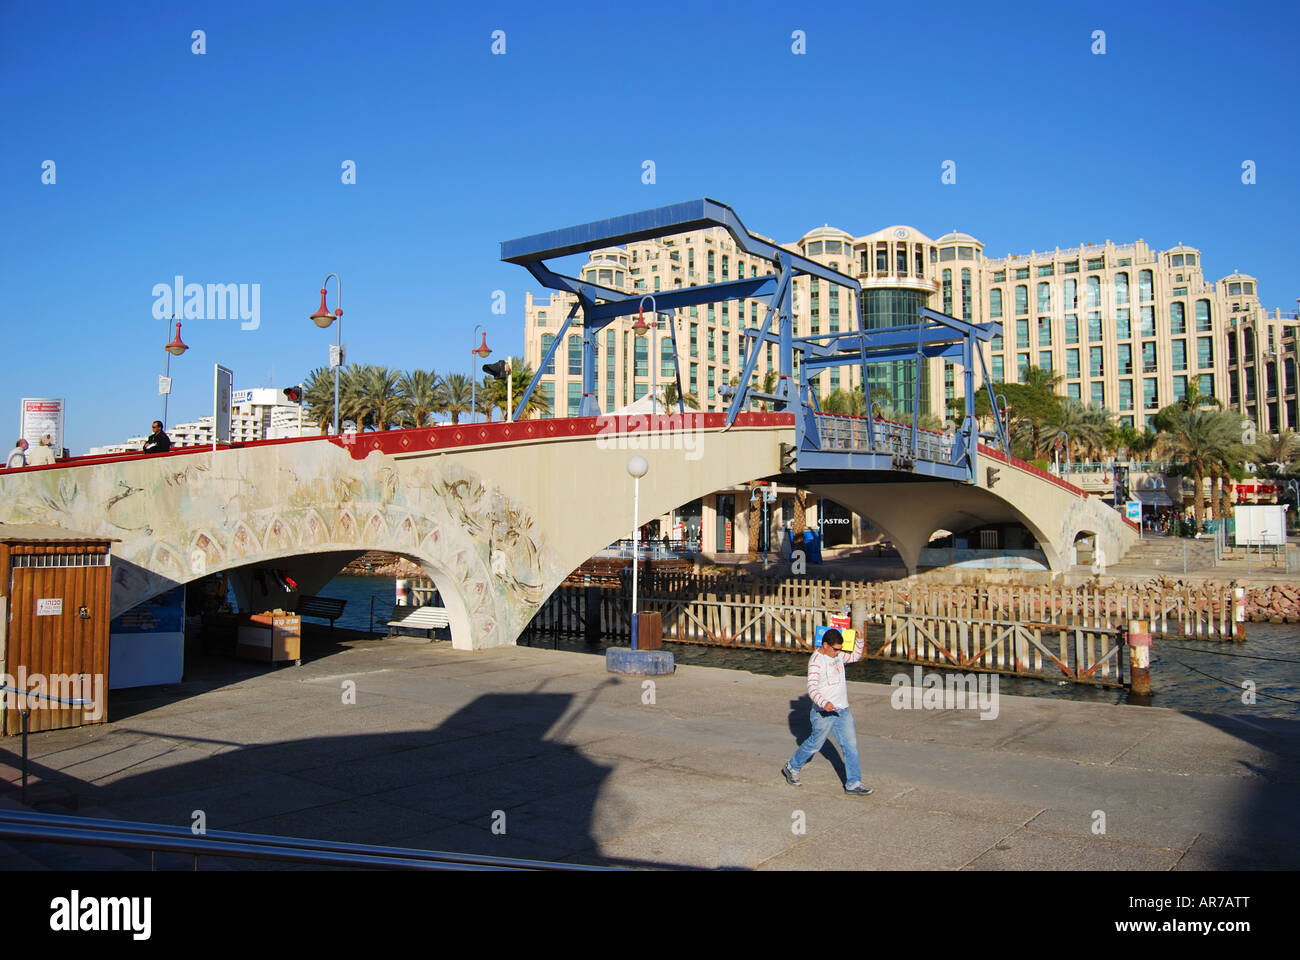 Promenade en bord de mer pont sur le canal, Eilat, quartier sud, Israël Banque D'Images